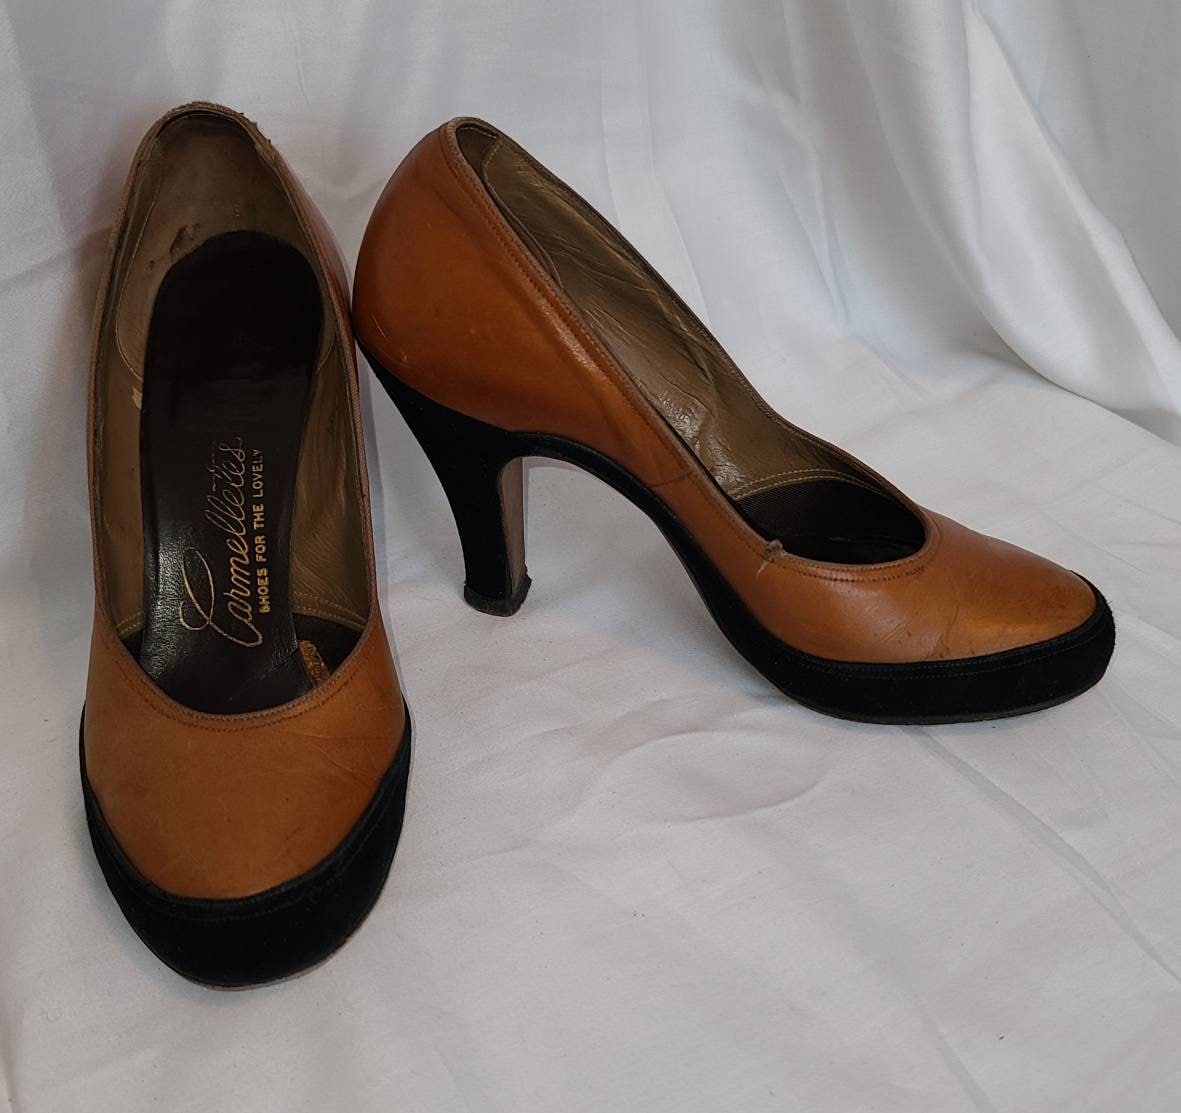 SALE Vintage 1940s Pumps Tan Leather Black Suede Round Toe High Heels Carmelletes Rockabilly 5 1/2 M